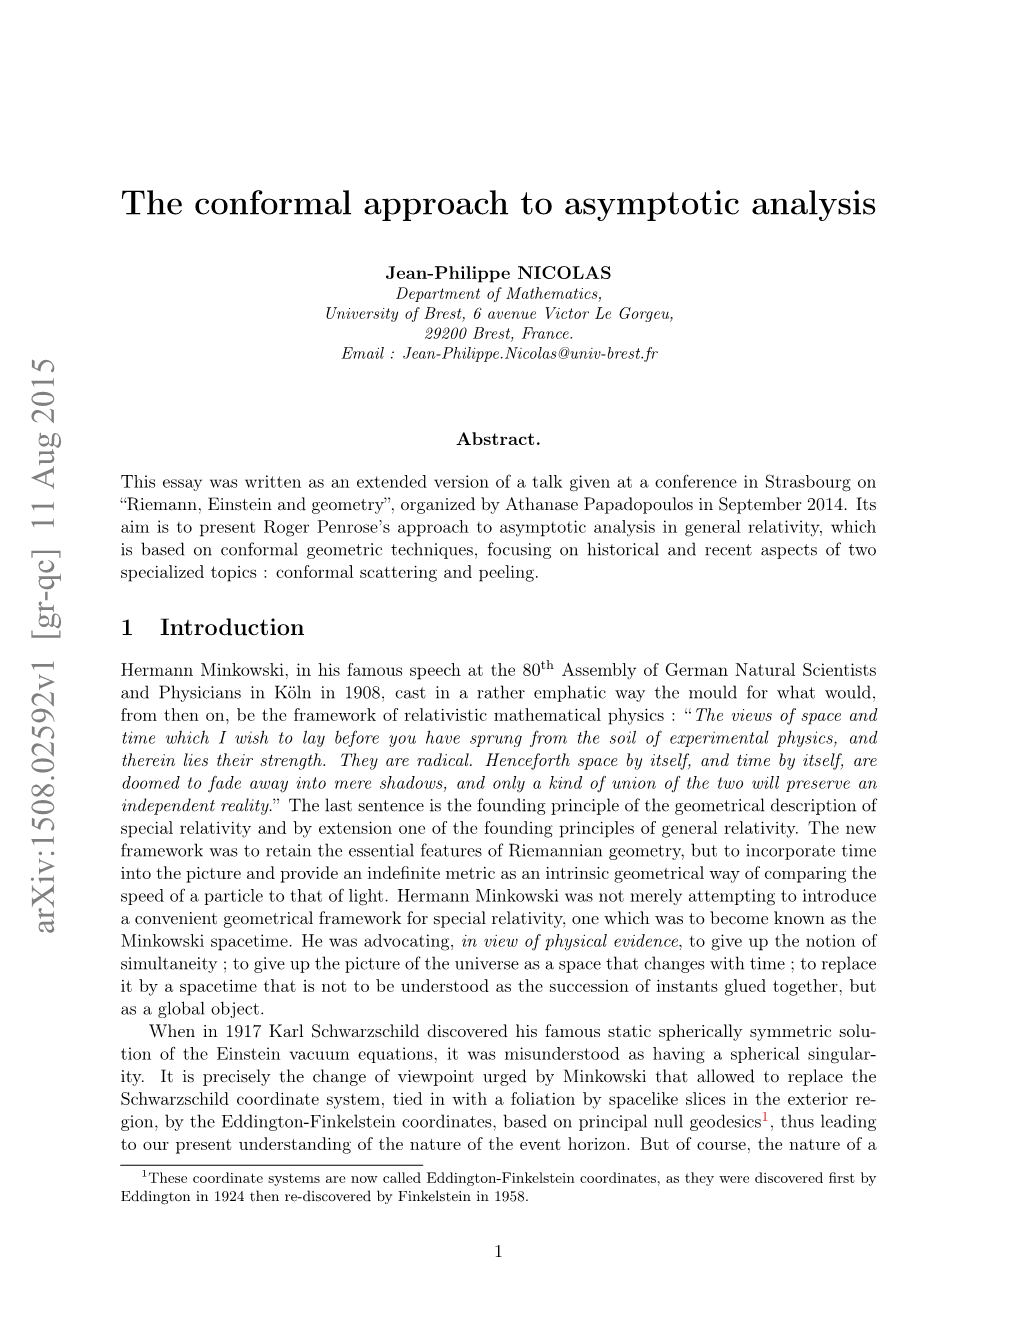 The Conformal Approach to Asymptotic Analysis Arxiv:1508.02592V1